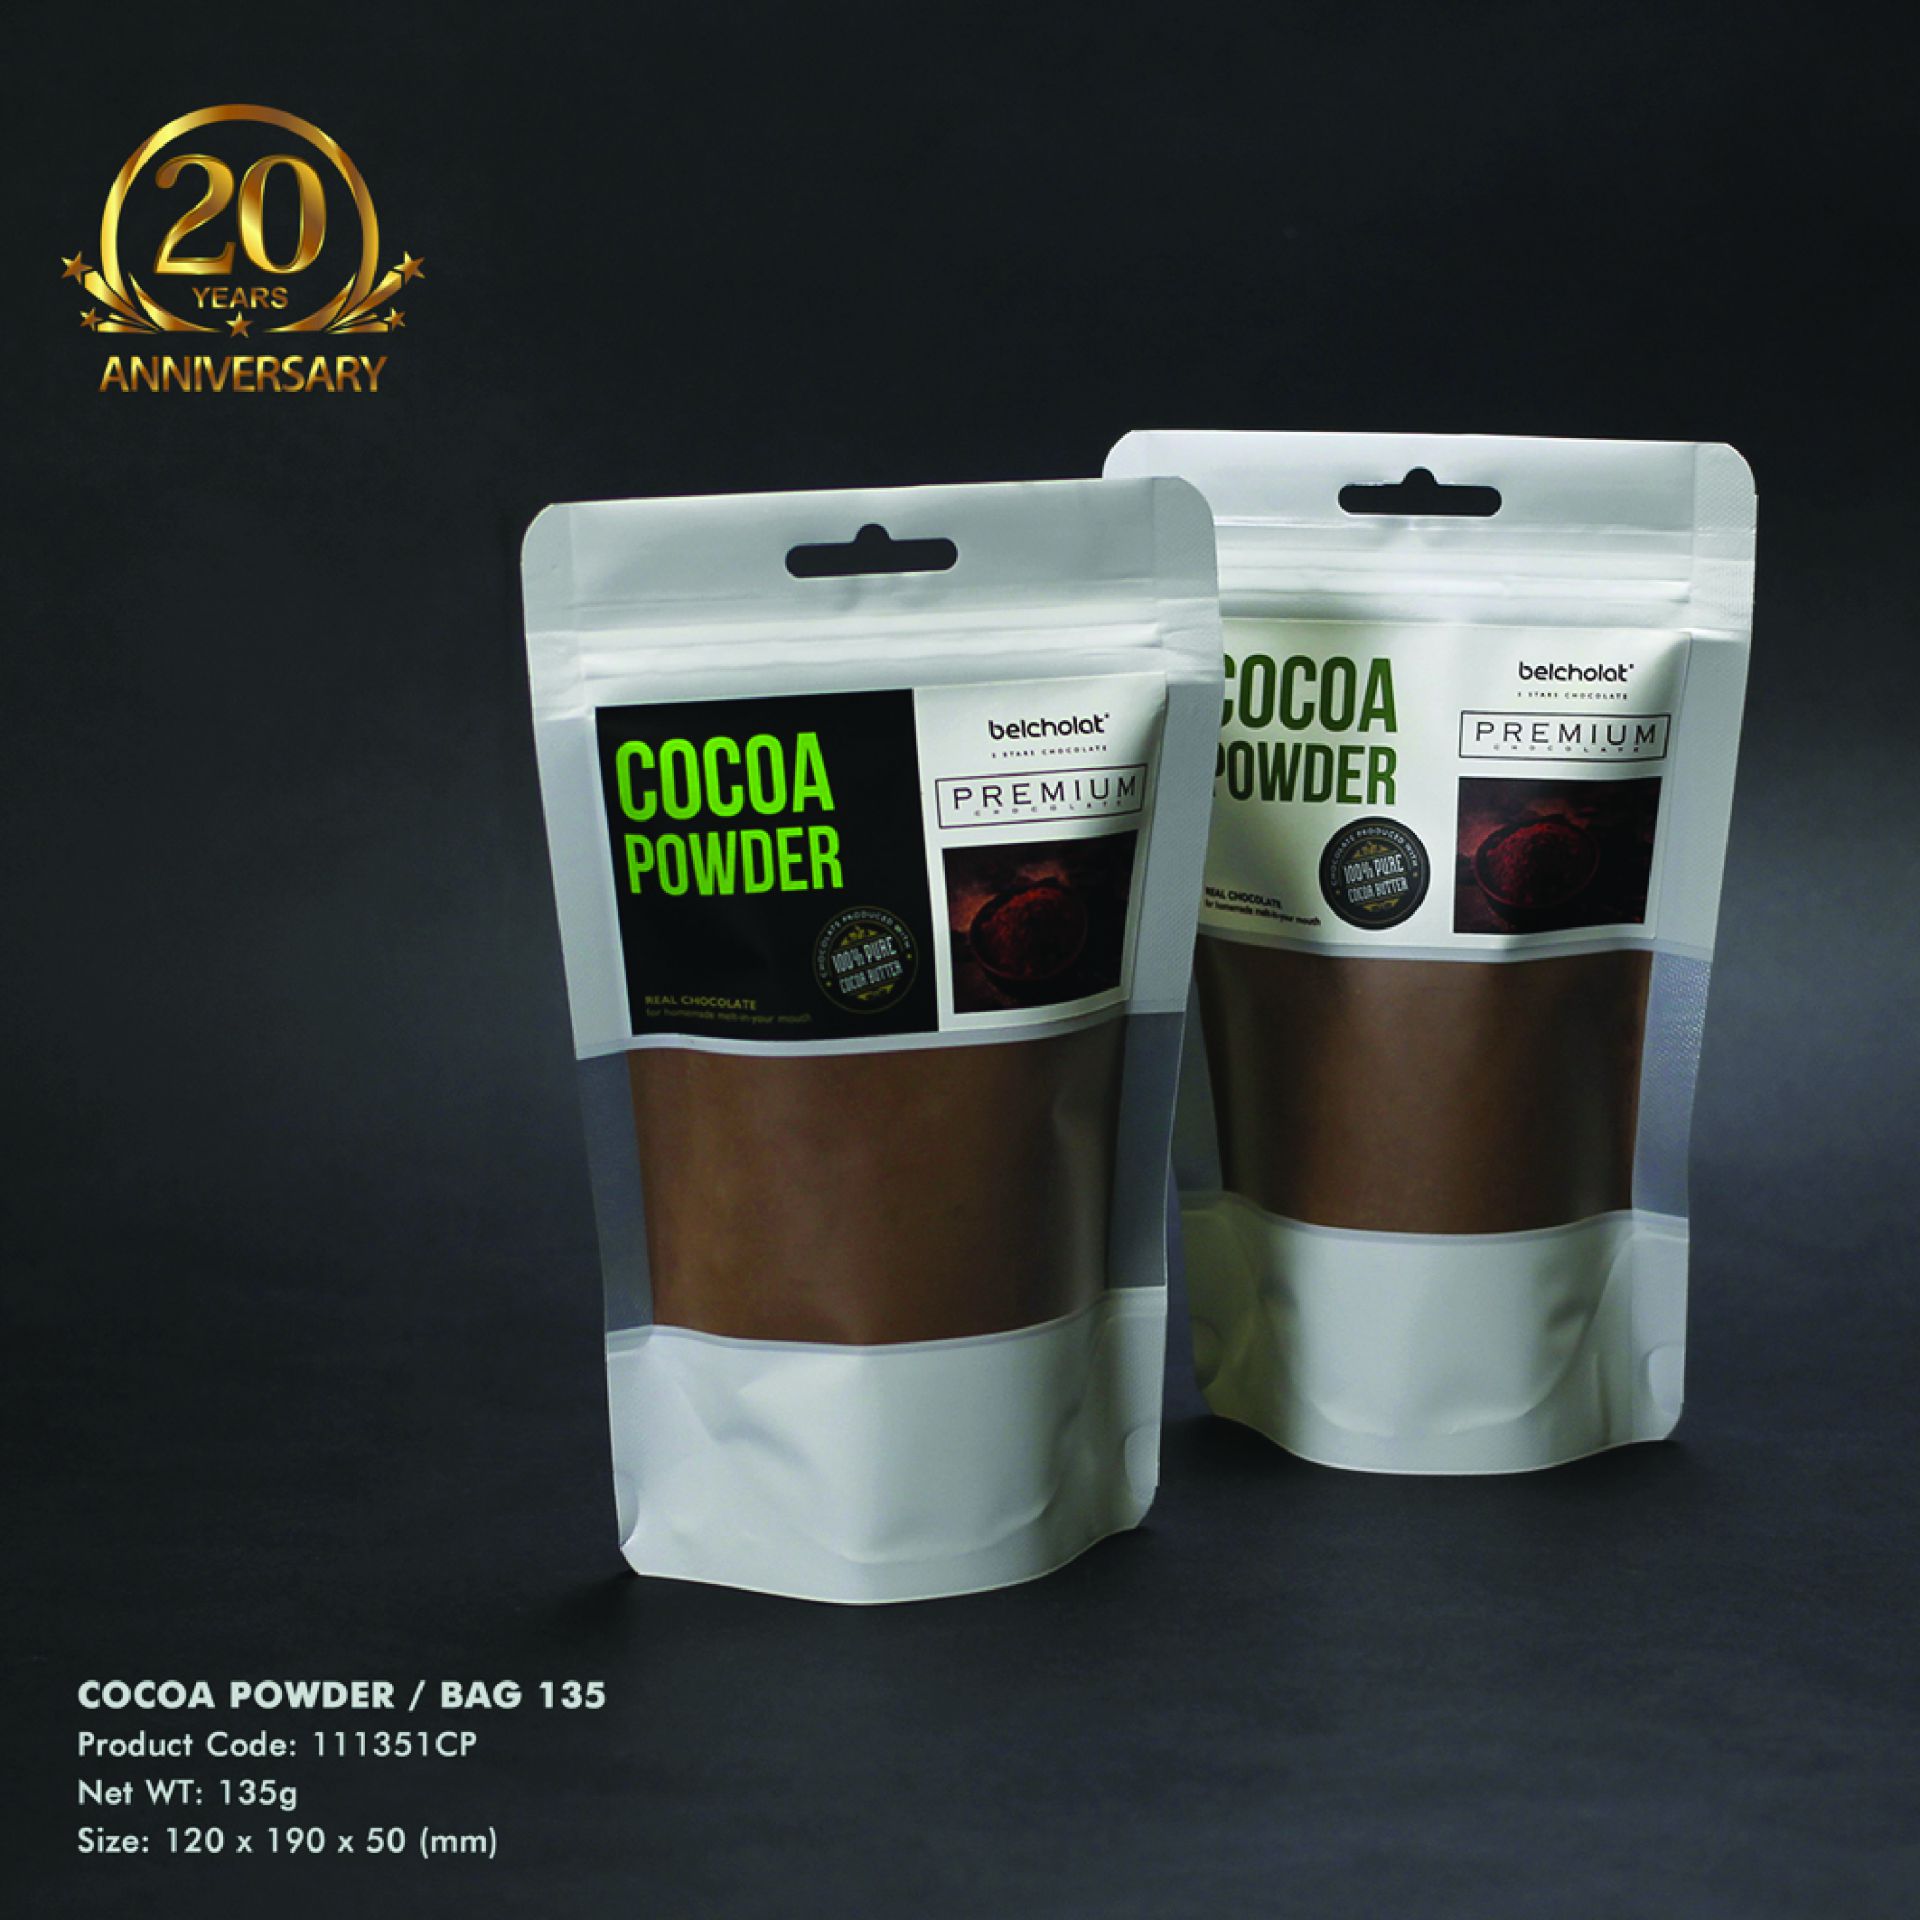 Cocoa Powder / Bag 135